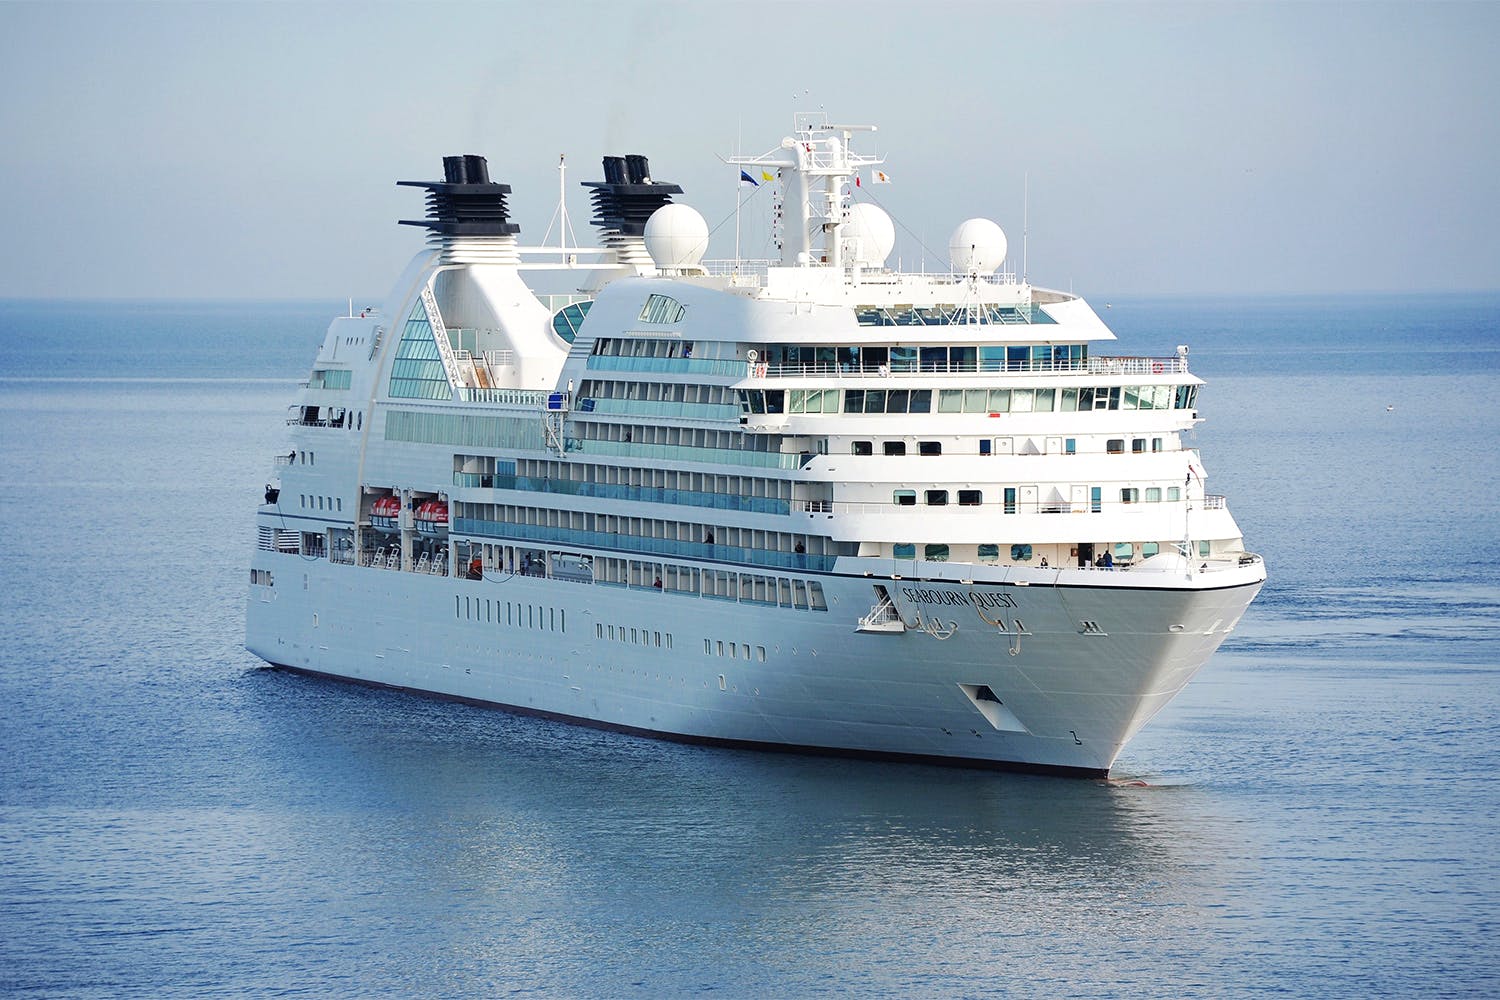 Cruise ship,Water transportation,Ship,Passenger ship,Vehicle,Naval architecture,Cruiseferry,Ferry,Motor ship,Boat